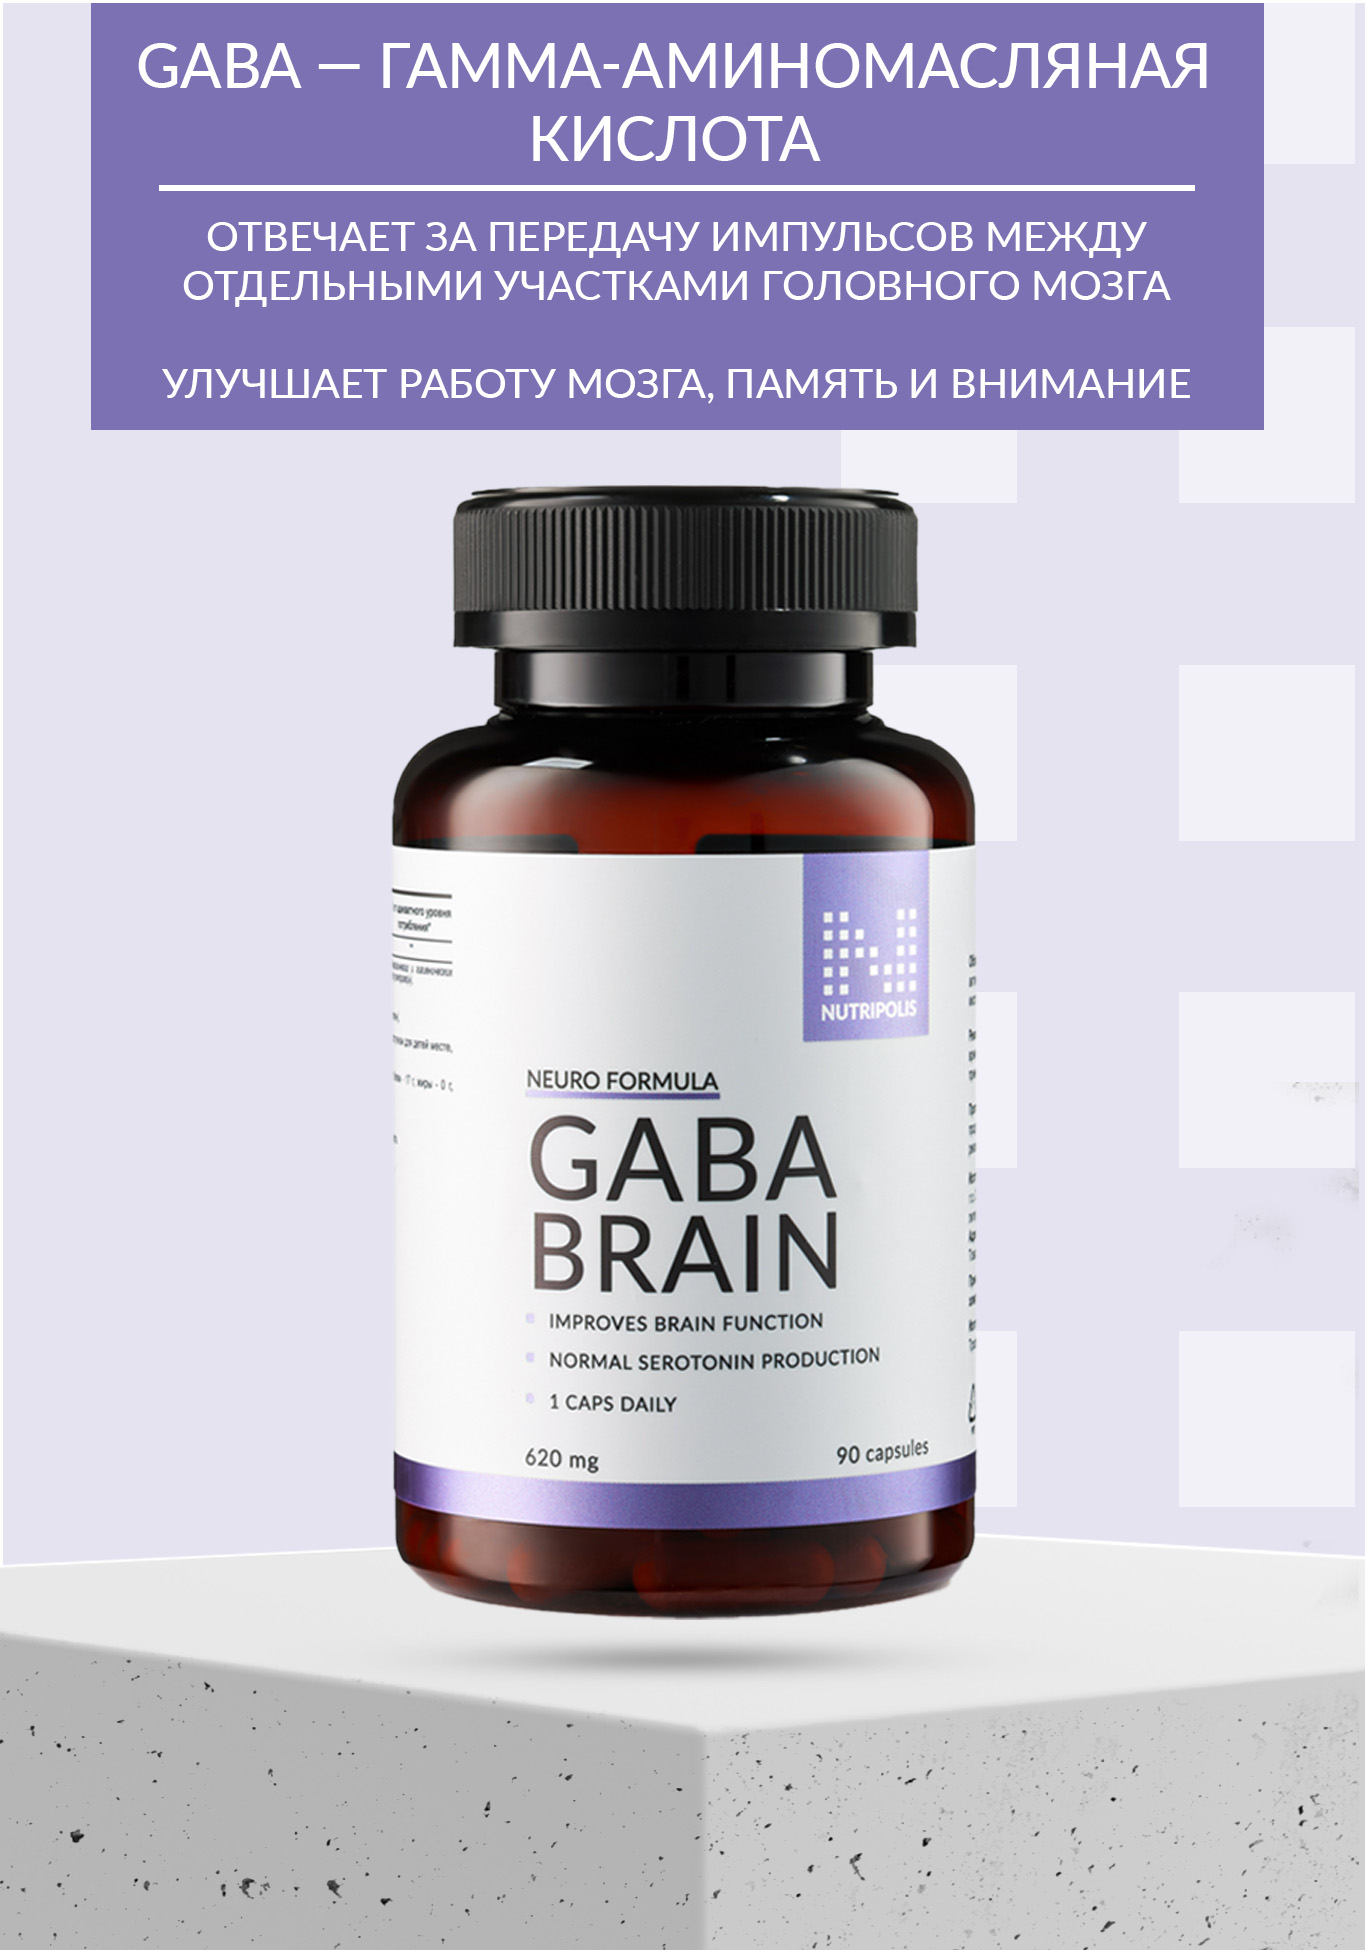 Gaba brain (Габа для мозга) NUTRIPOLIS - фото 3